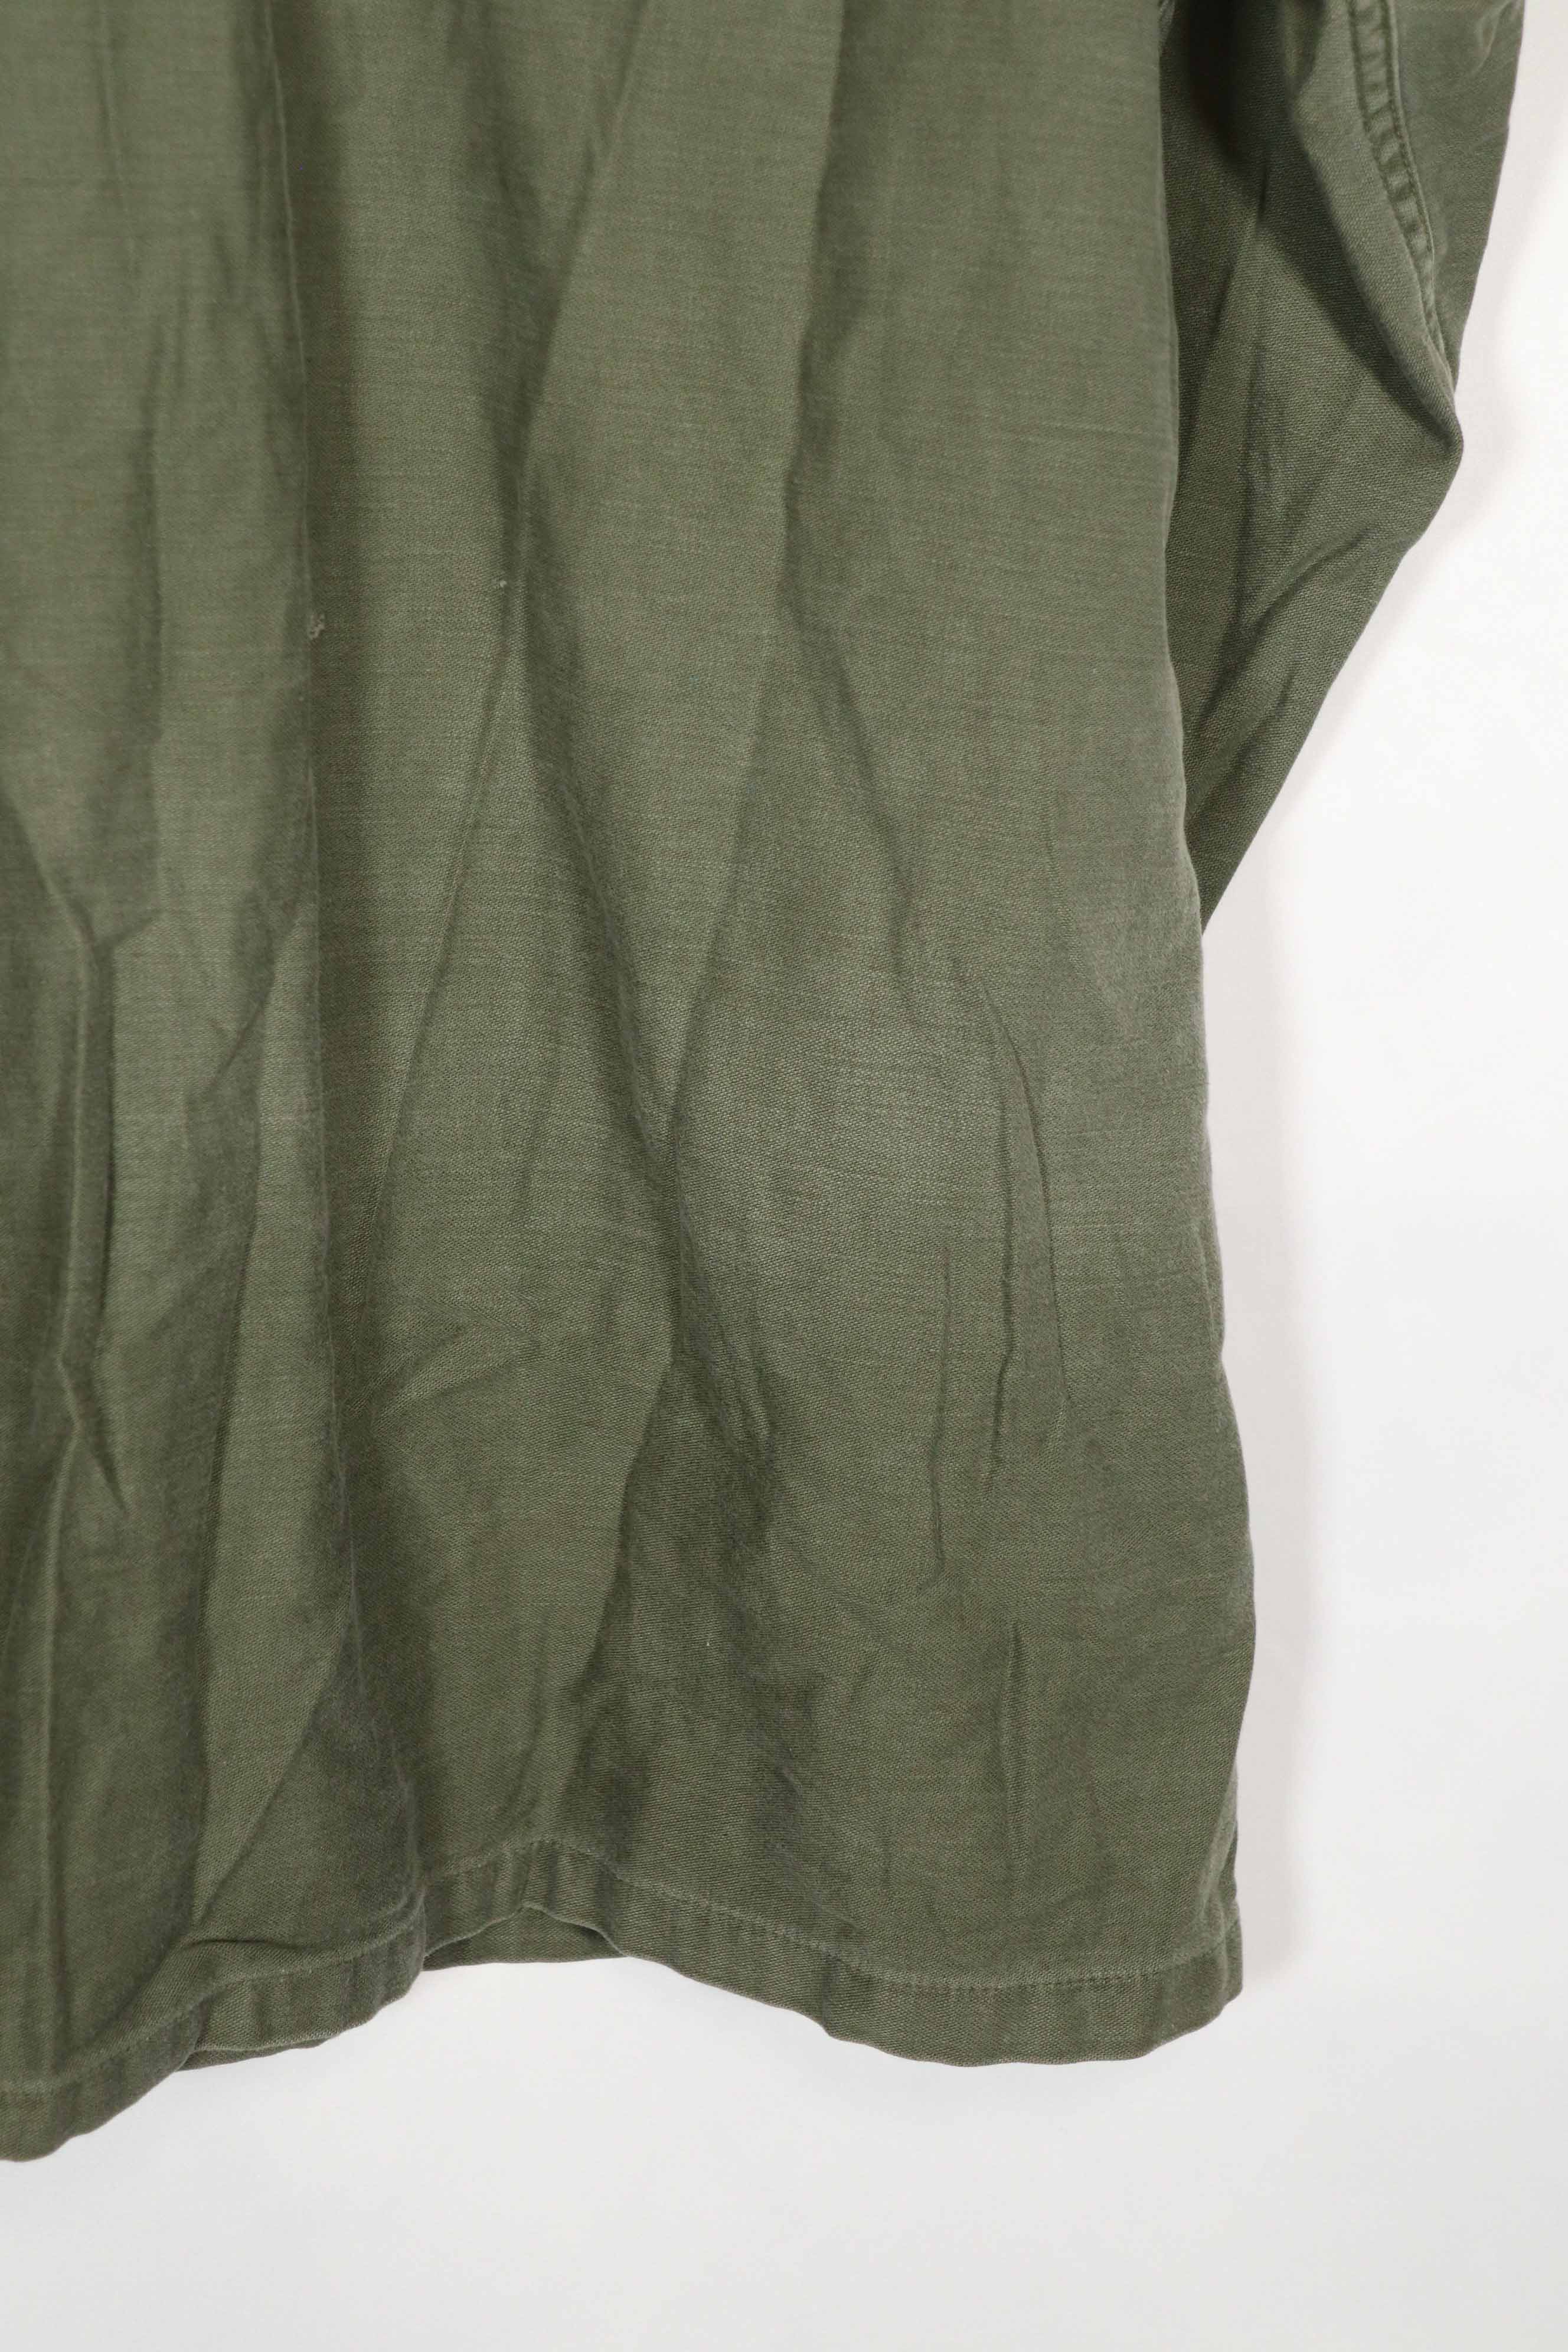 Real OG-107 Utility Shirt 16th Infantry Regiment, 1st Infantry Division Rare Used Item